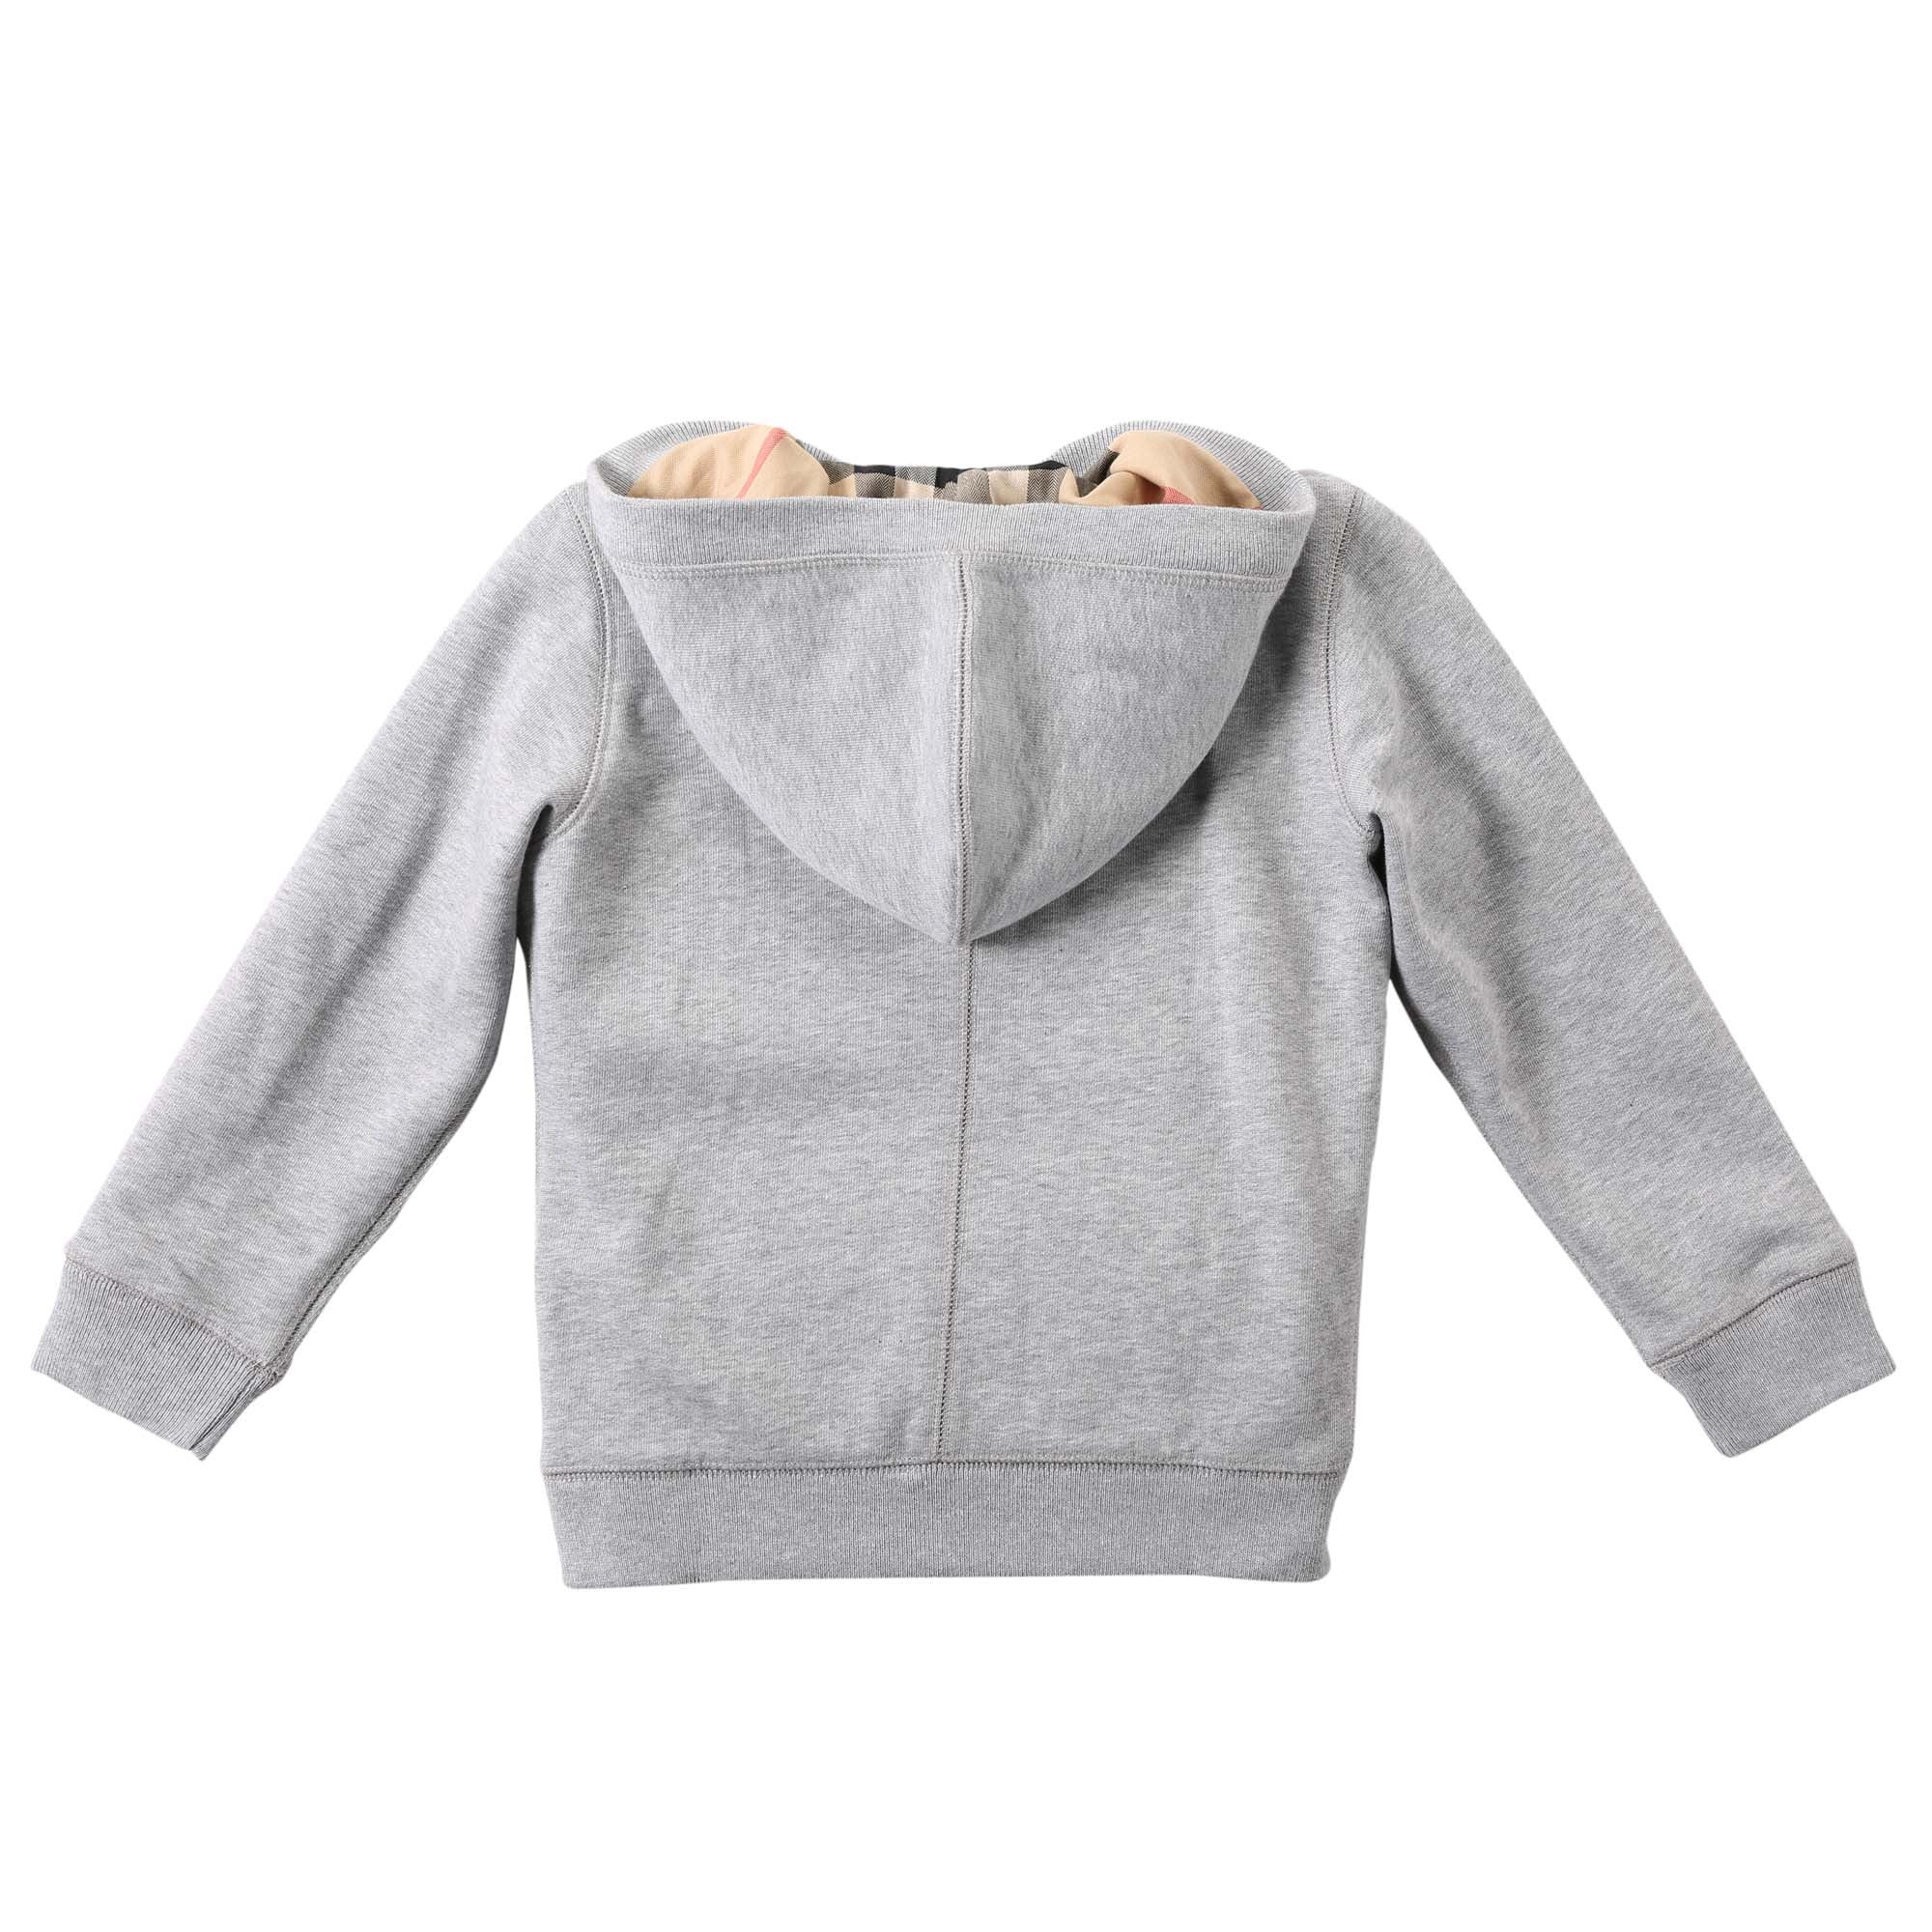 Boys Grey Cotton Jersey Hooded Zip-Up Top - CÉMAROSE | Children's Fashion Store - 2